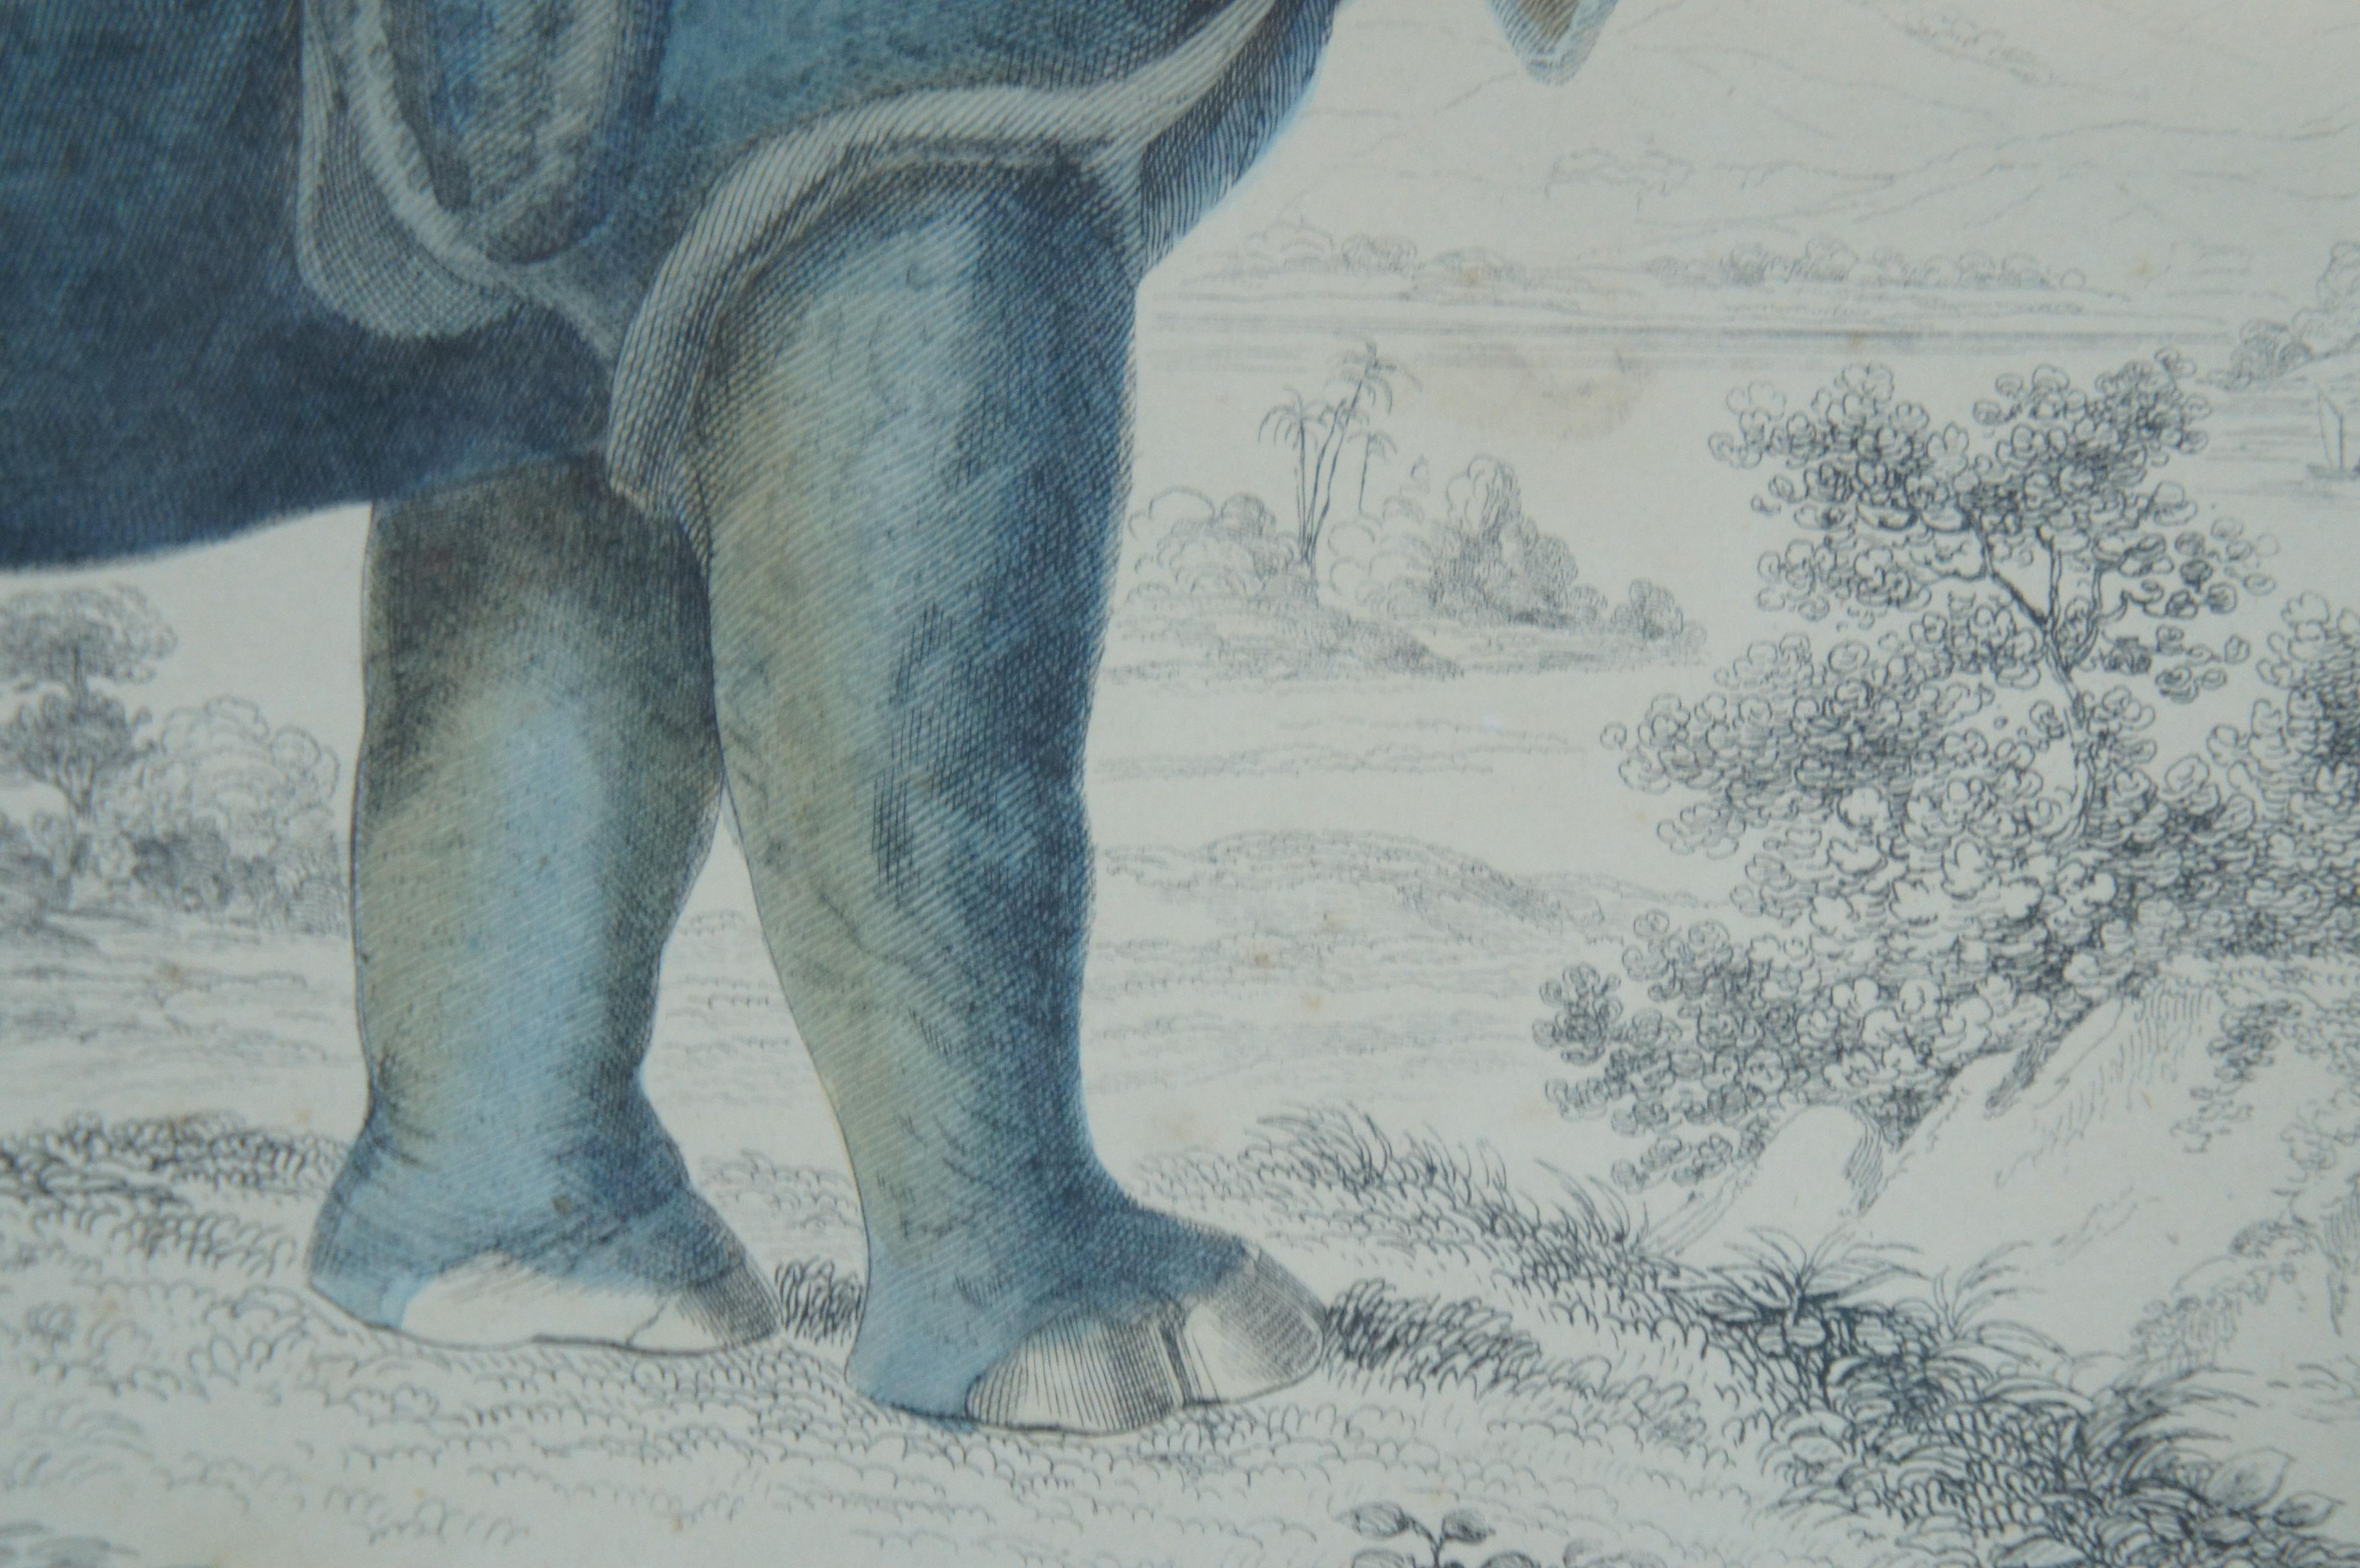 Antique 1842 English Fullarton African Rhino Rhinoceros Engraving 28